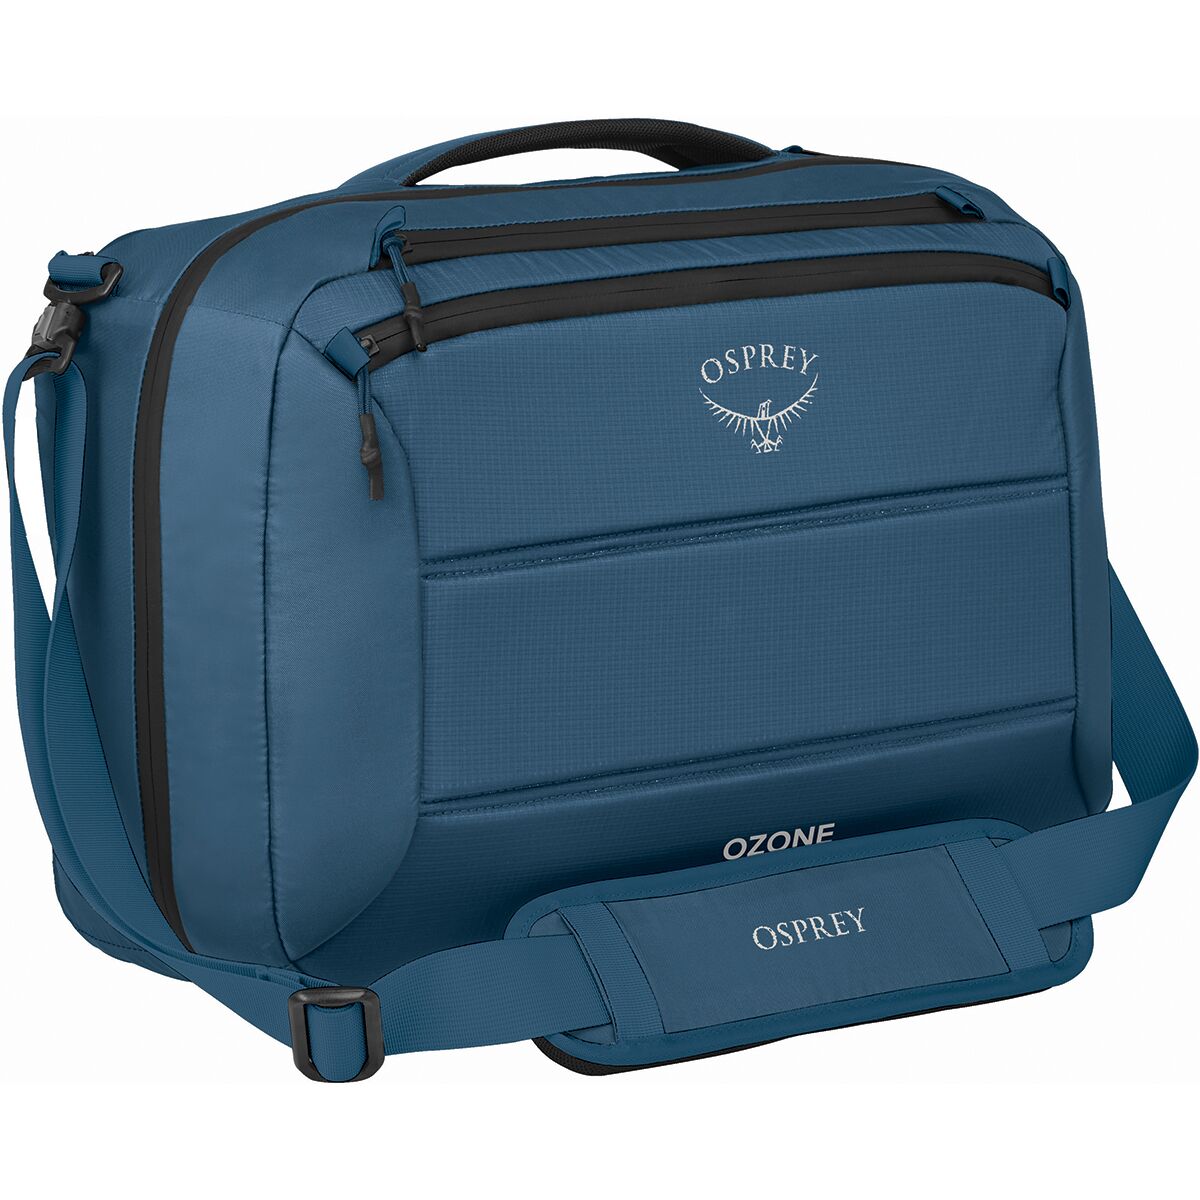 Osprey Packs Ozone CarryOn Boarding Bag